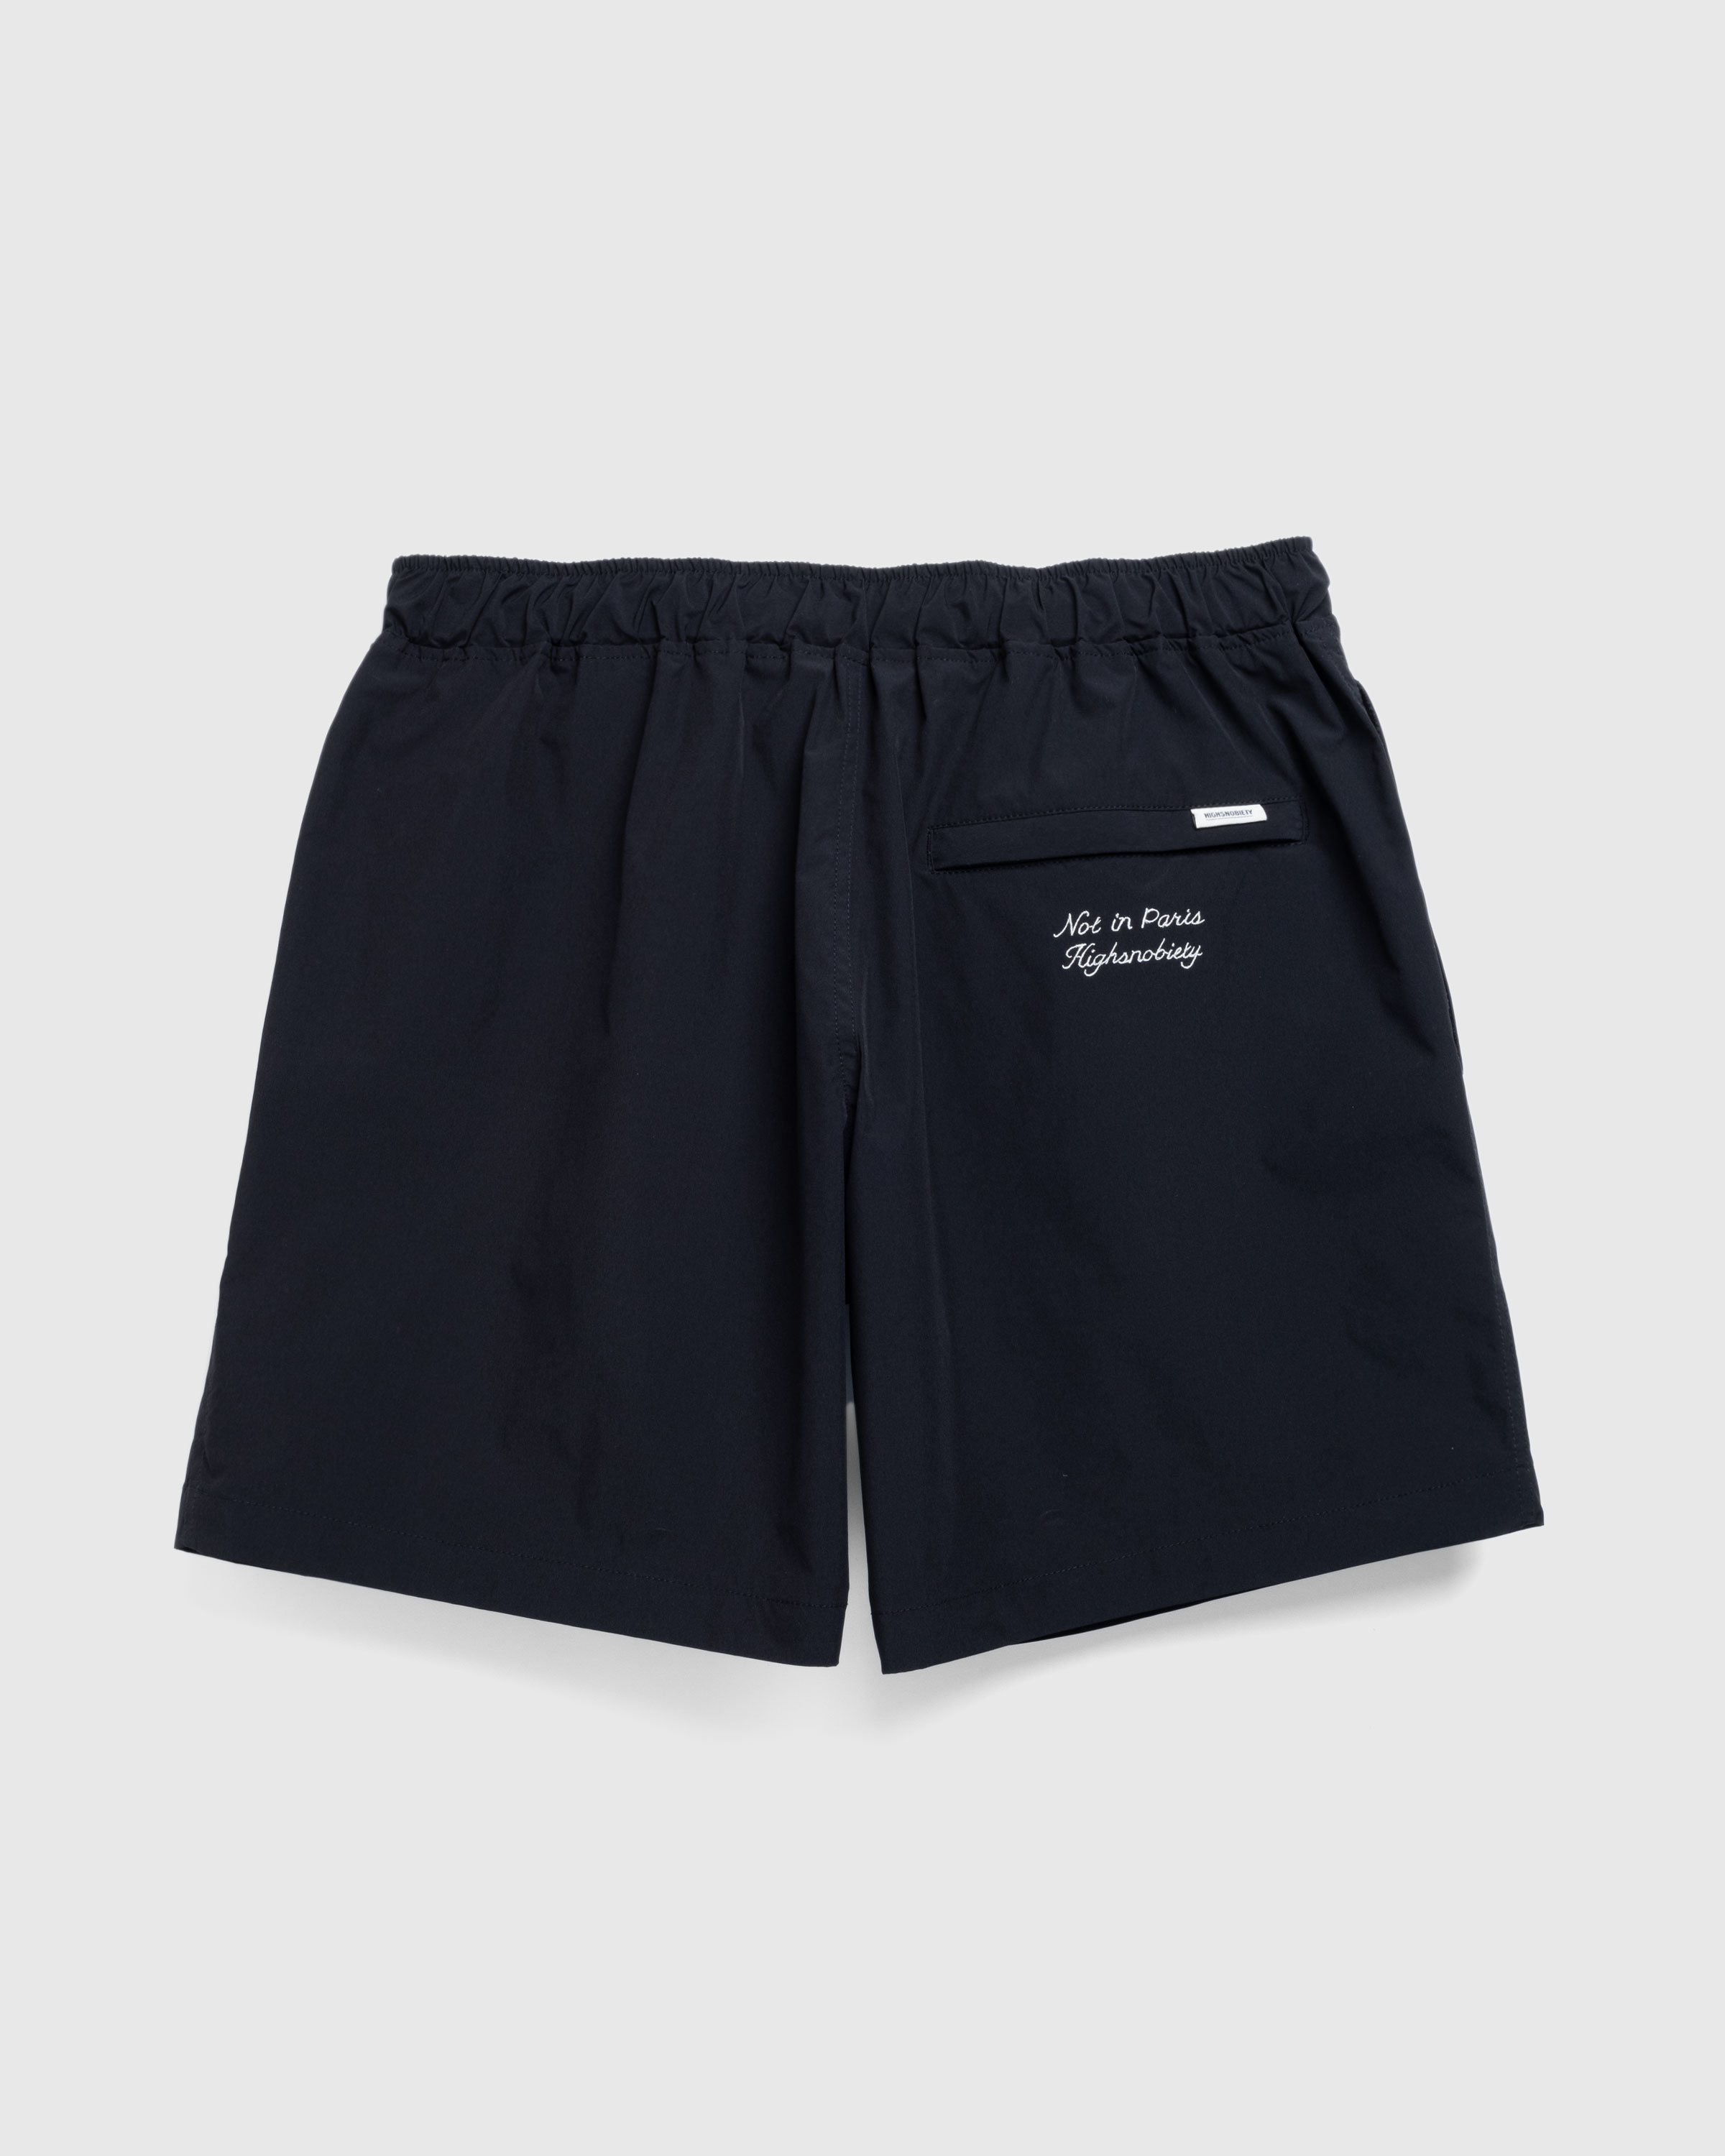 Highsnobiety – Not In Paris Nylon Shorts Black  - Bermuda Cuts - Black - Image 3